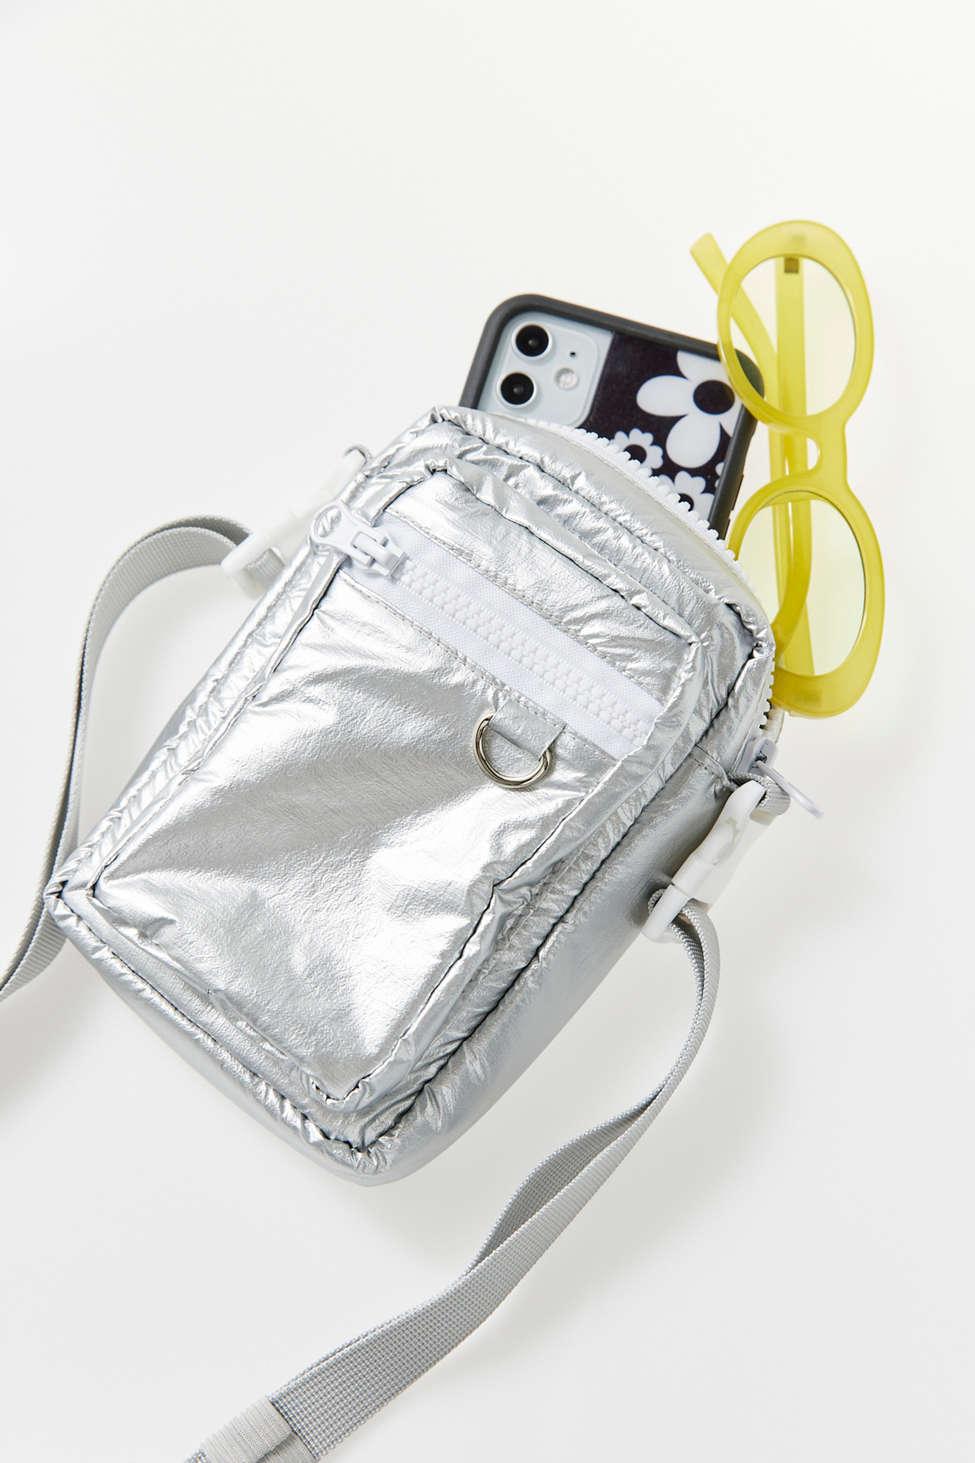 designer nylon crossbody bag